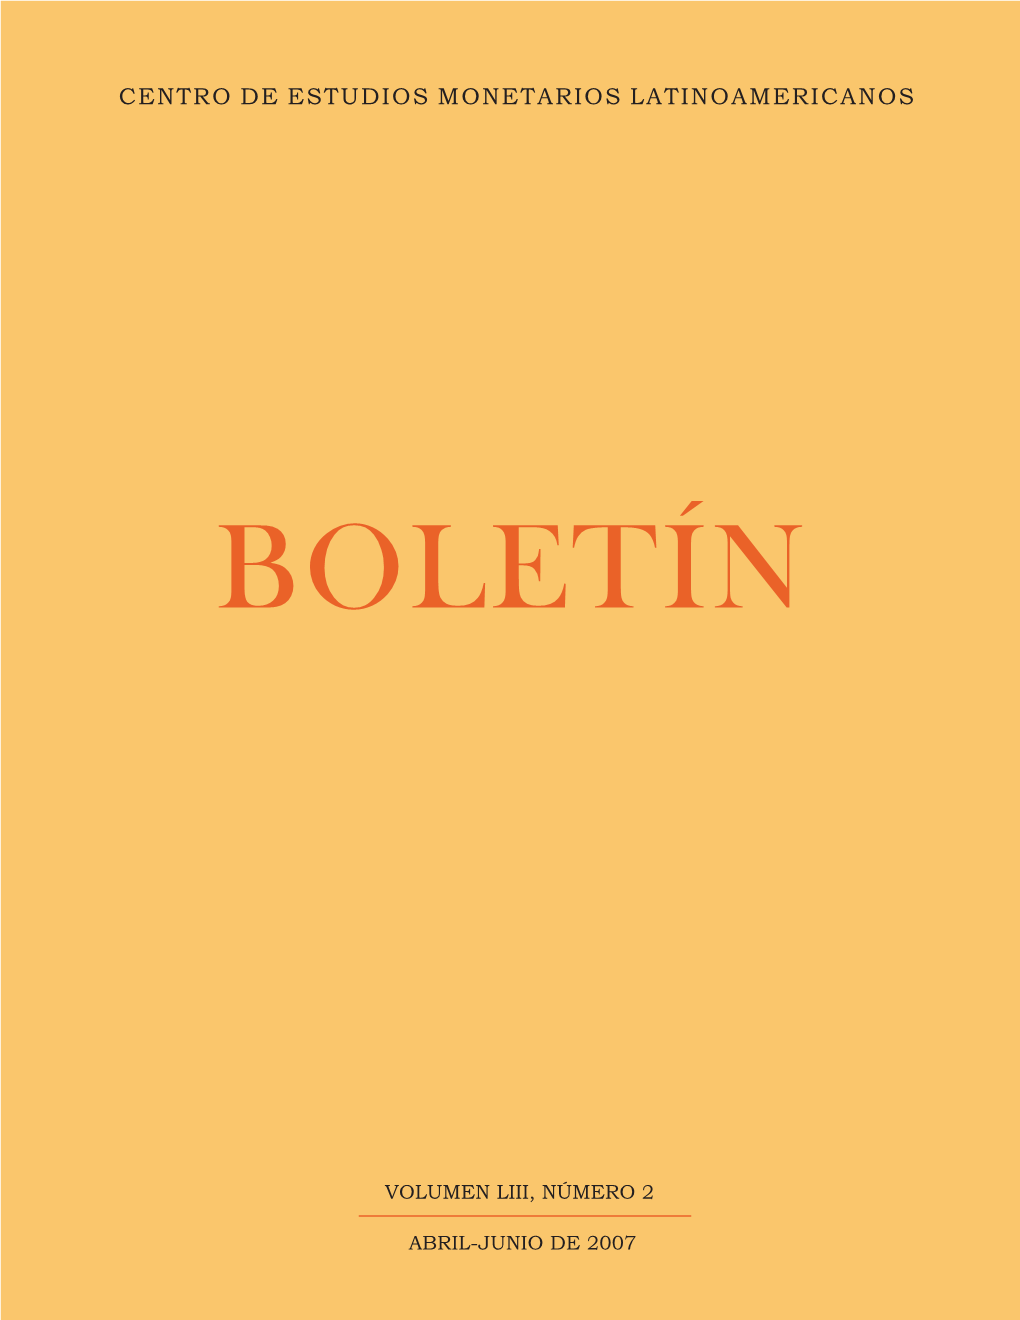 Boletin: Volumen Liii, Número 2, Abril-Junio